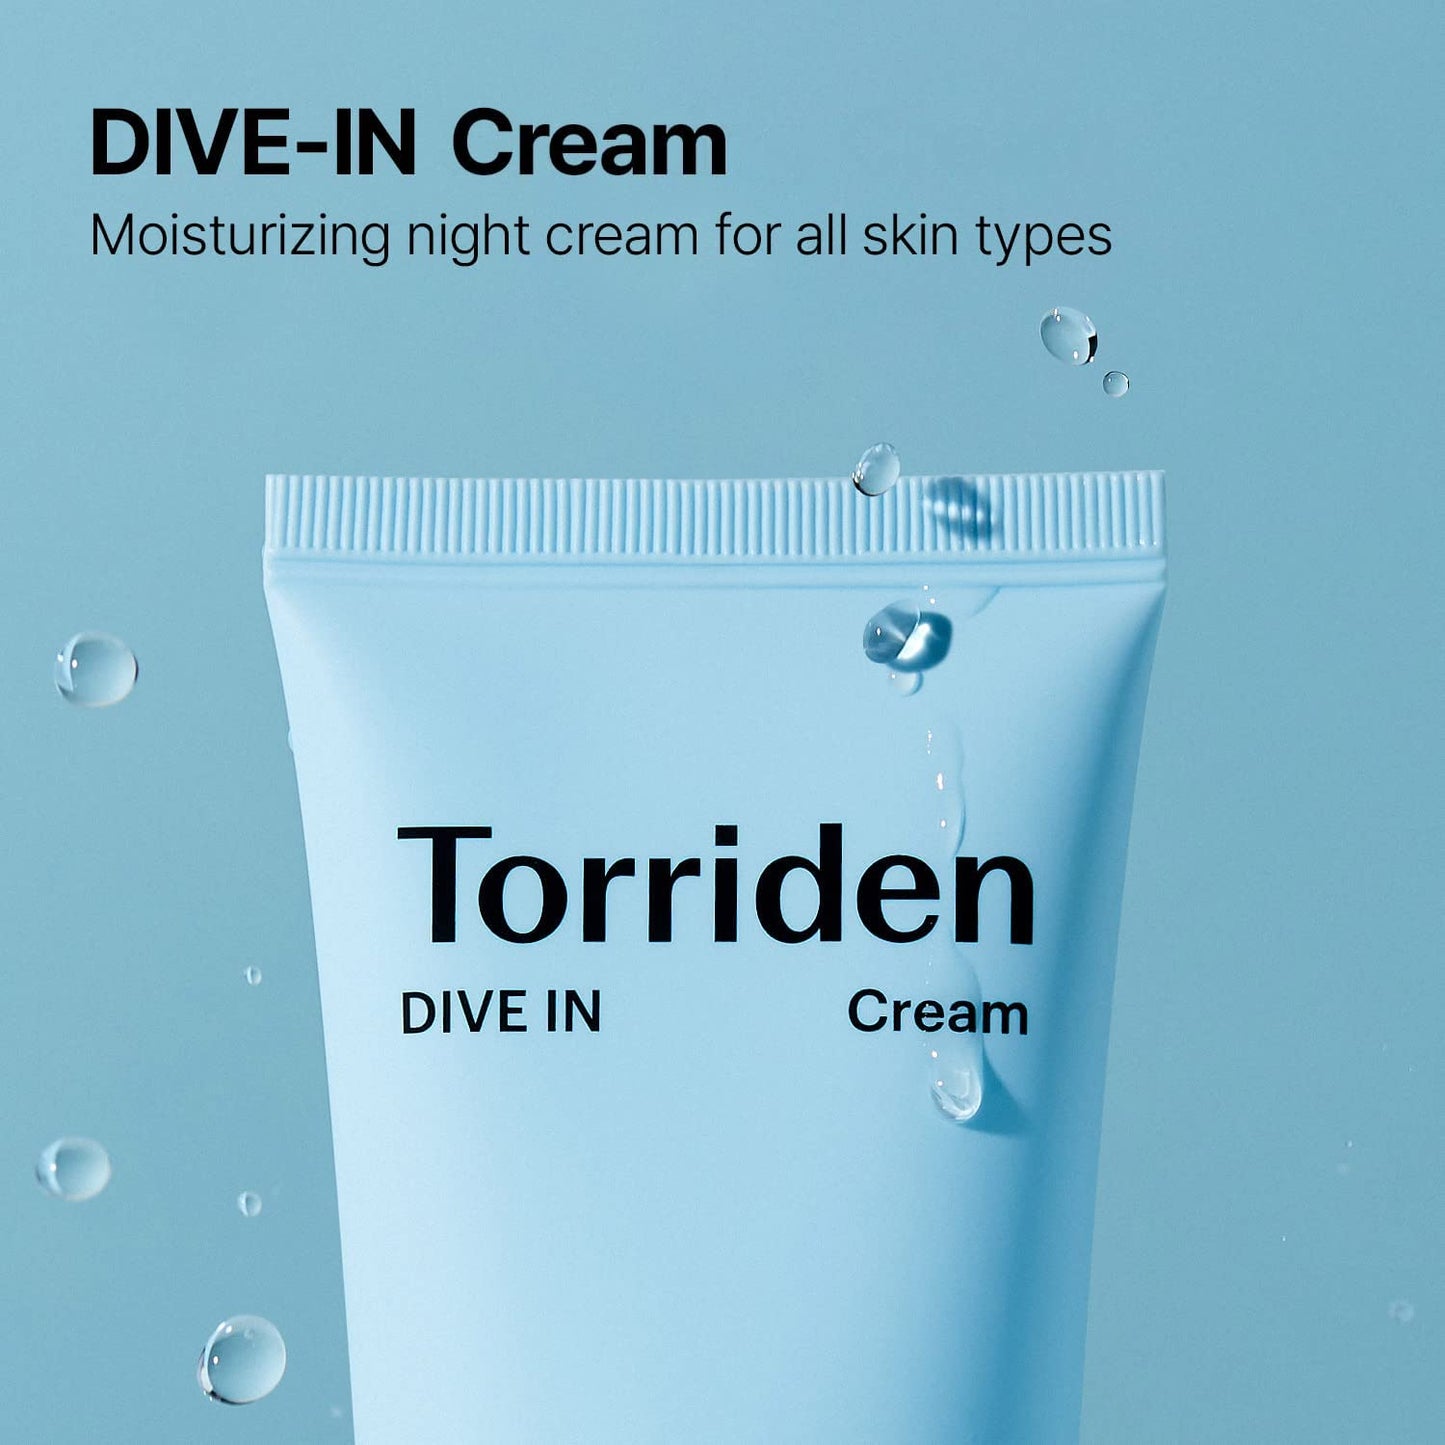 Torriden DIVE-IN Low-Molecular Hyaluronic Acid Cream 2.71 fl oz |